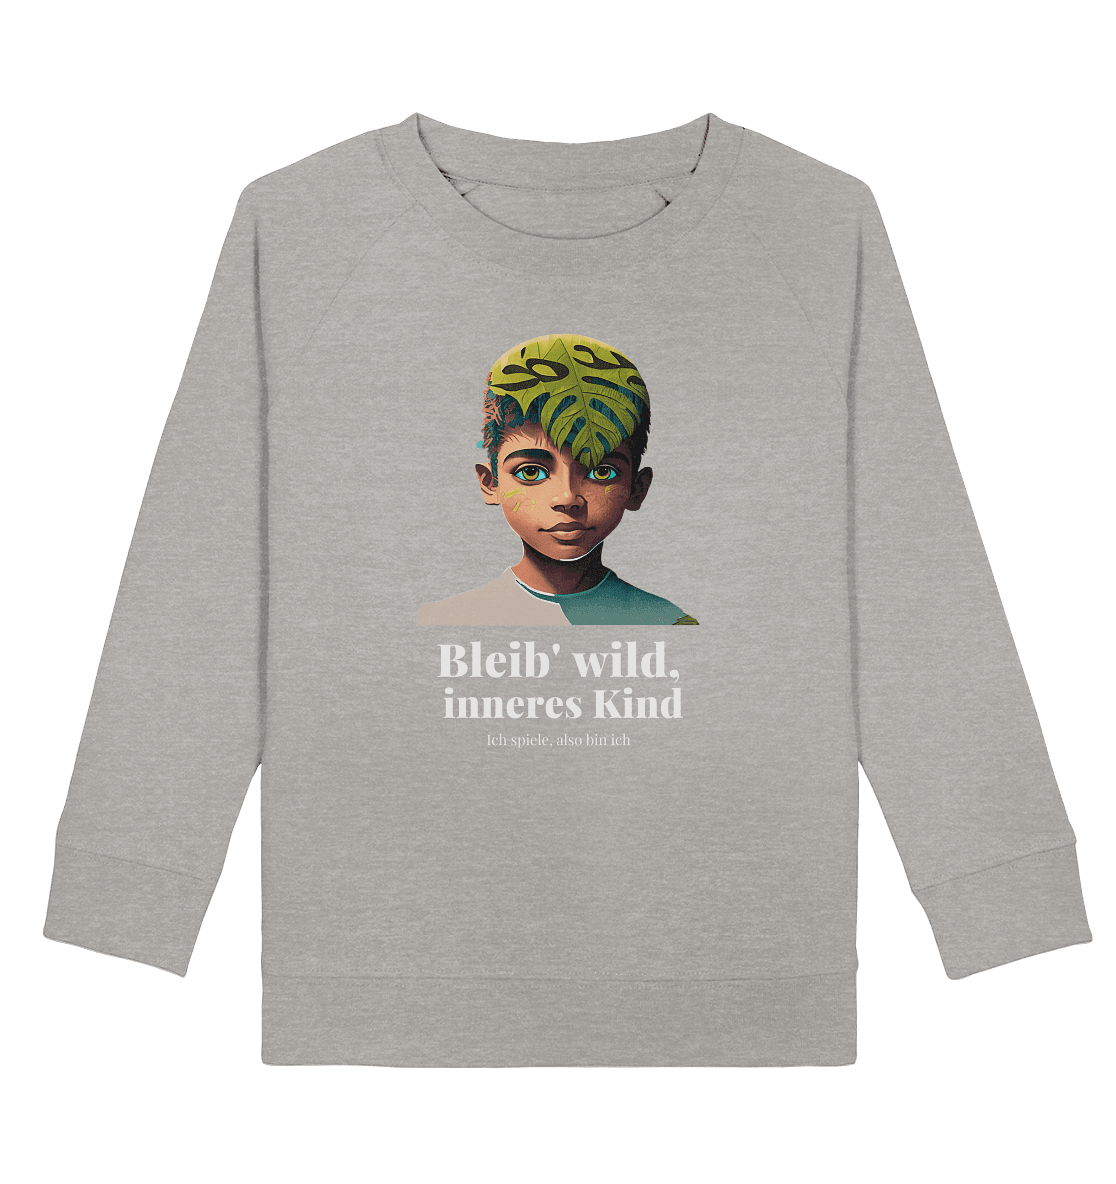 Bleib wild inneres Kind - Kids Organic Sweatshirt